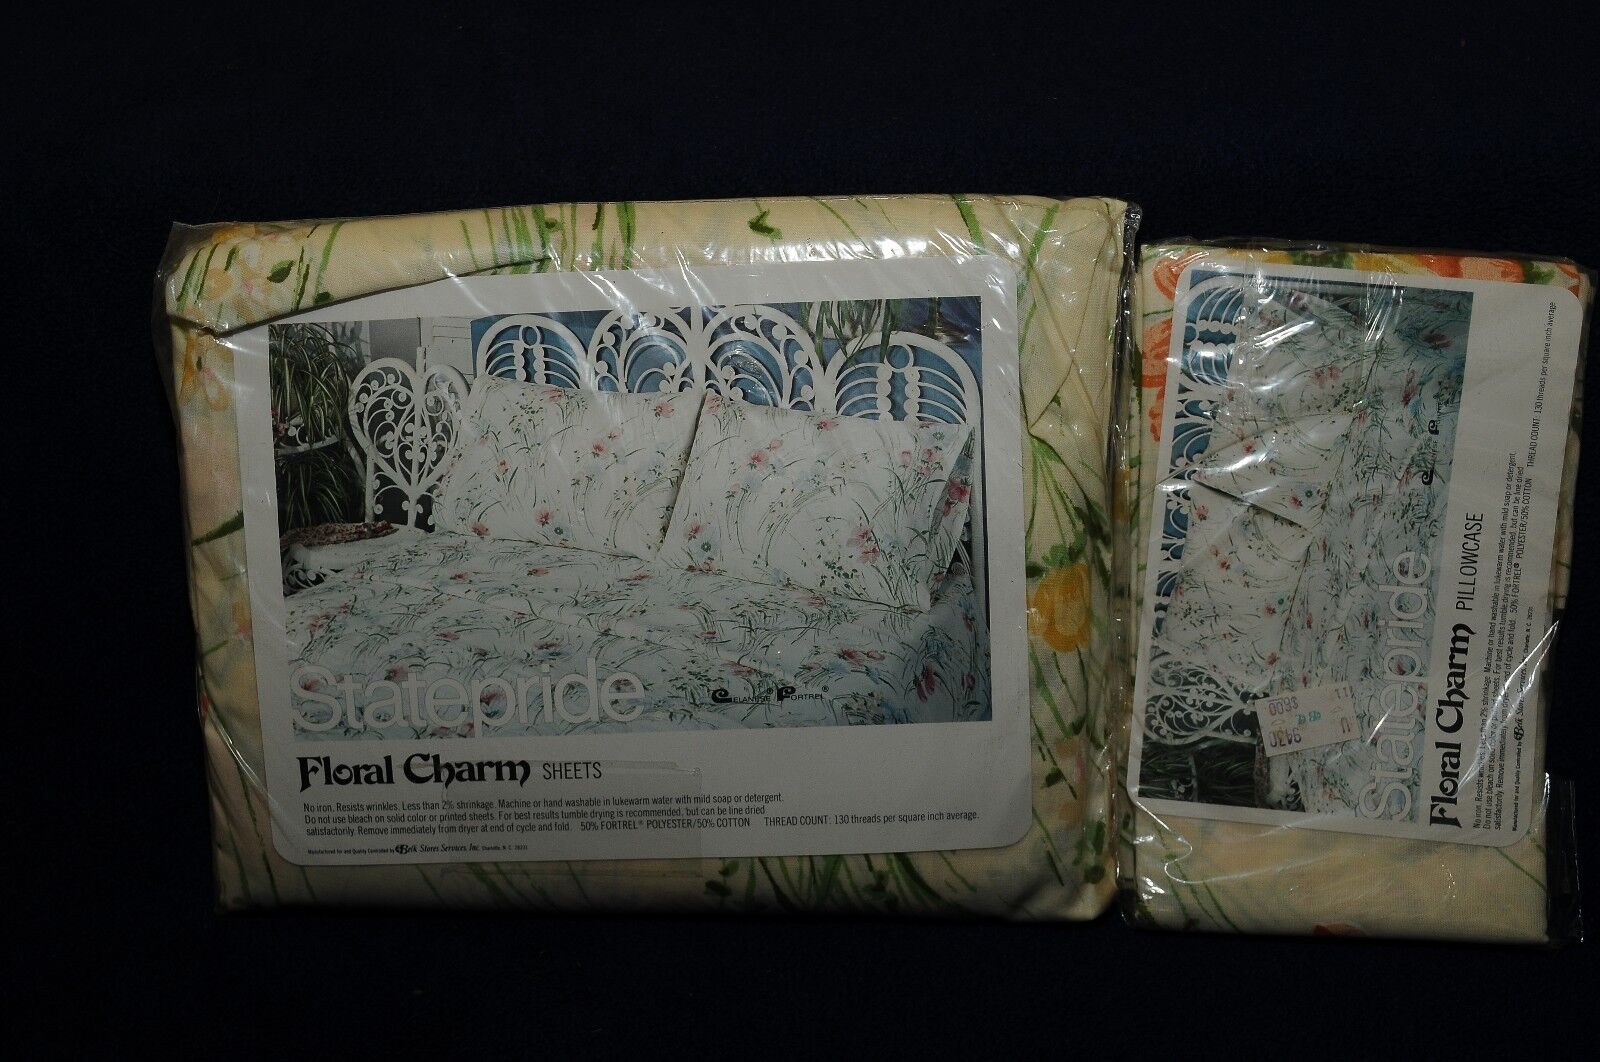 VTG NOS 70s State Pride Belk Floral Charm Beige Double flat sheet & pillow cases